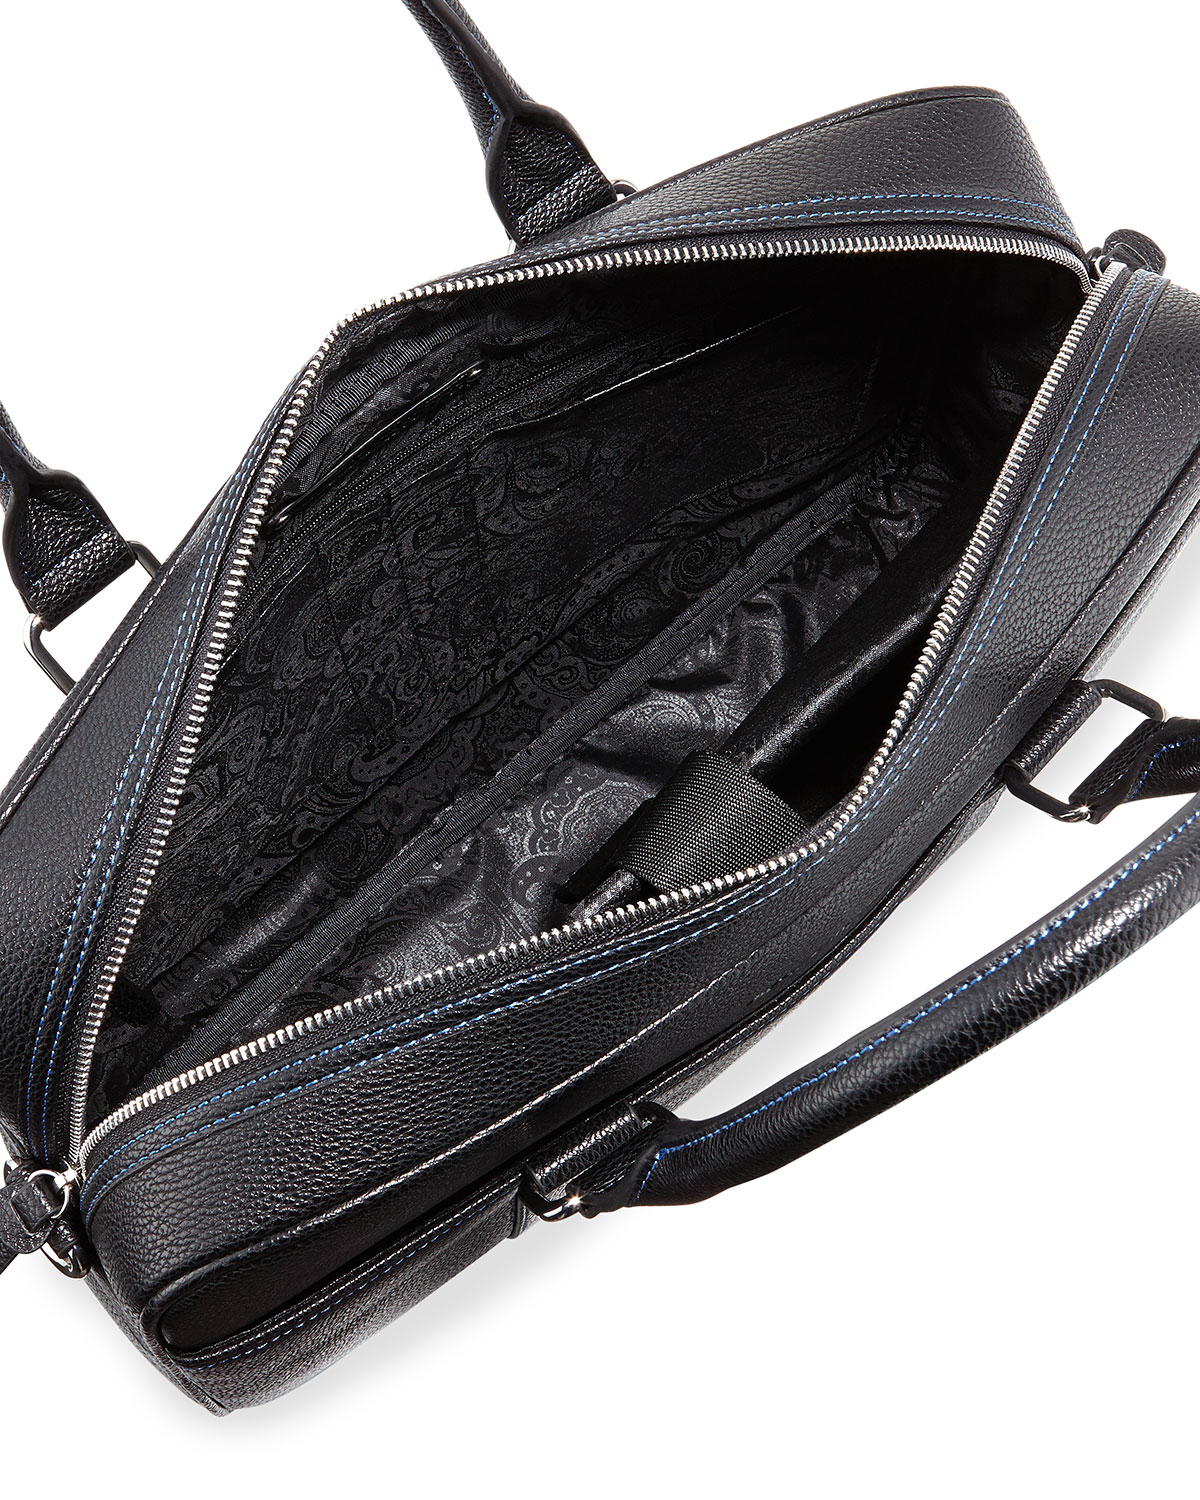 Robert Graham Moore Faux Leather (pu) Zip-top Messenger Bag in Black for Men - Lyst